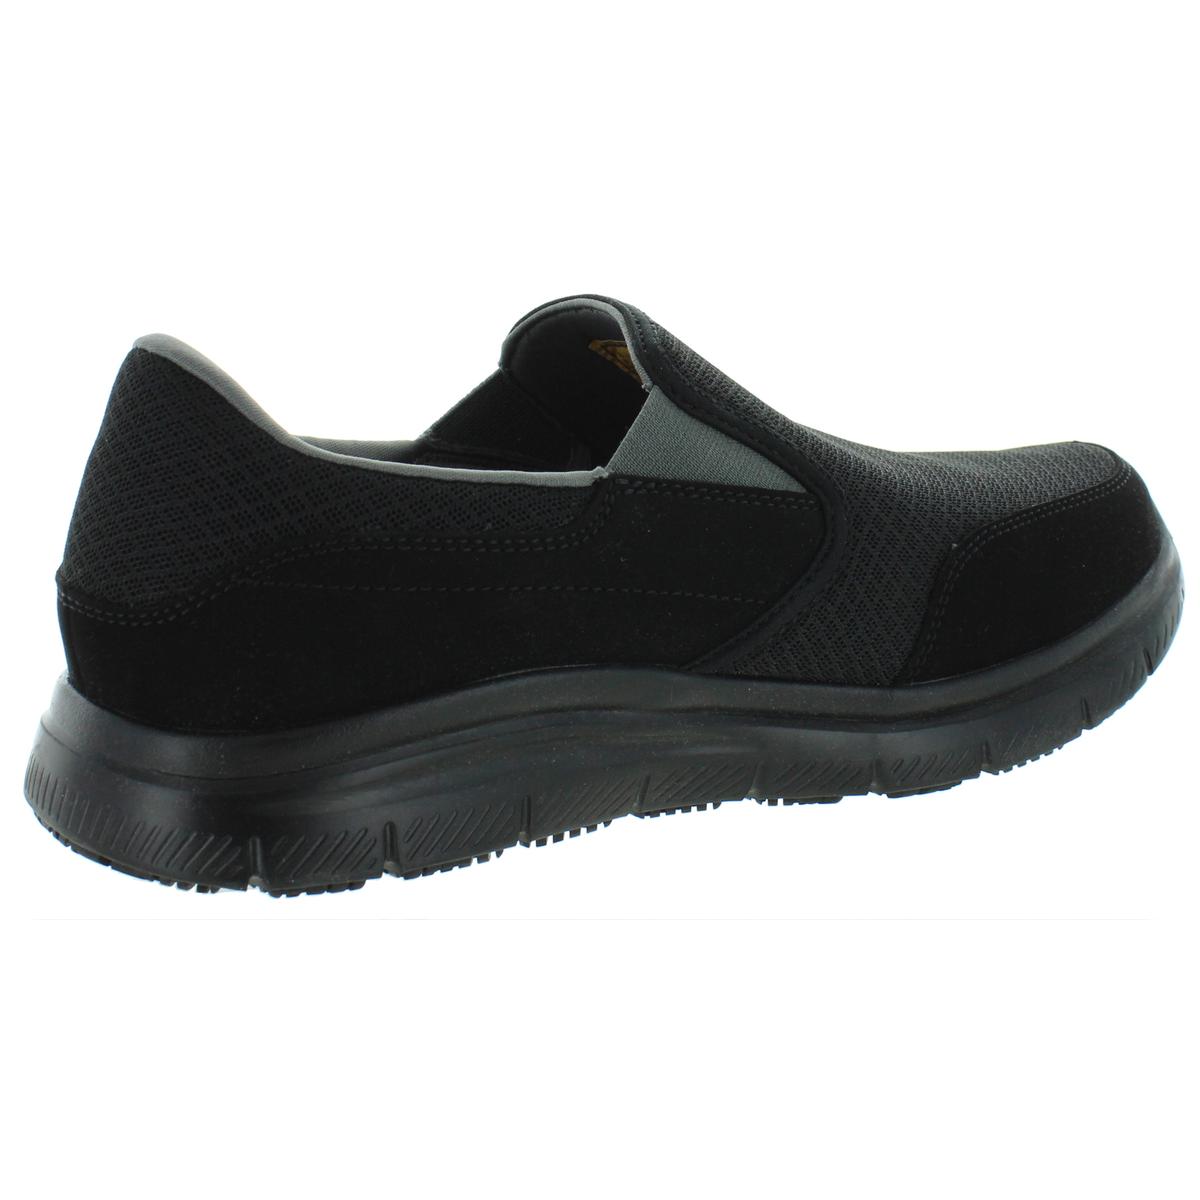 Skechers Mens Black Slip Resistant Casual Shoes 13 Wide (E) BHFO 7462 ...